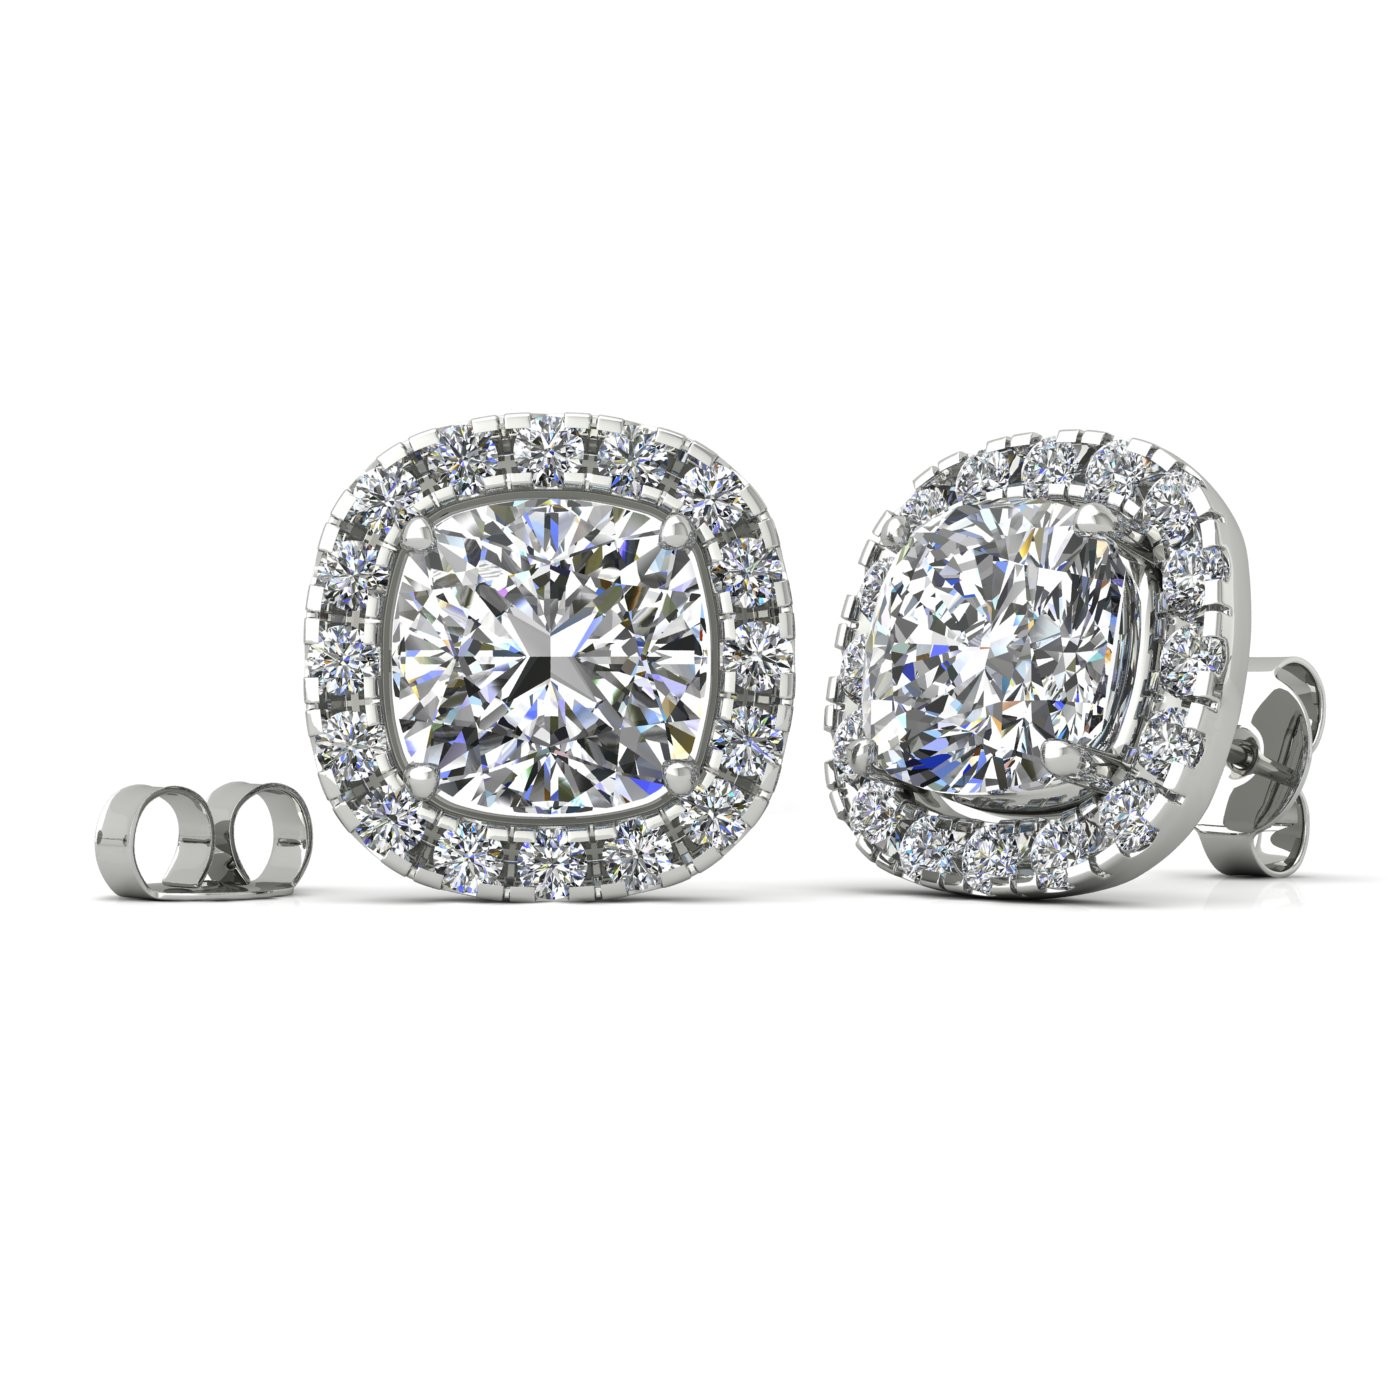 18k white gold 0,3 ct each (0,6 tcw) 4 prongs cushion shape diamond earrings with diamond pavÉ set halo Photos & images